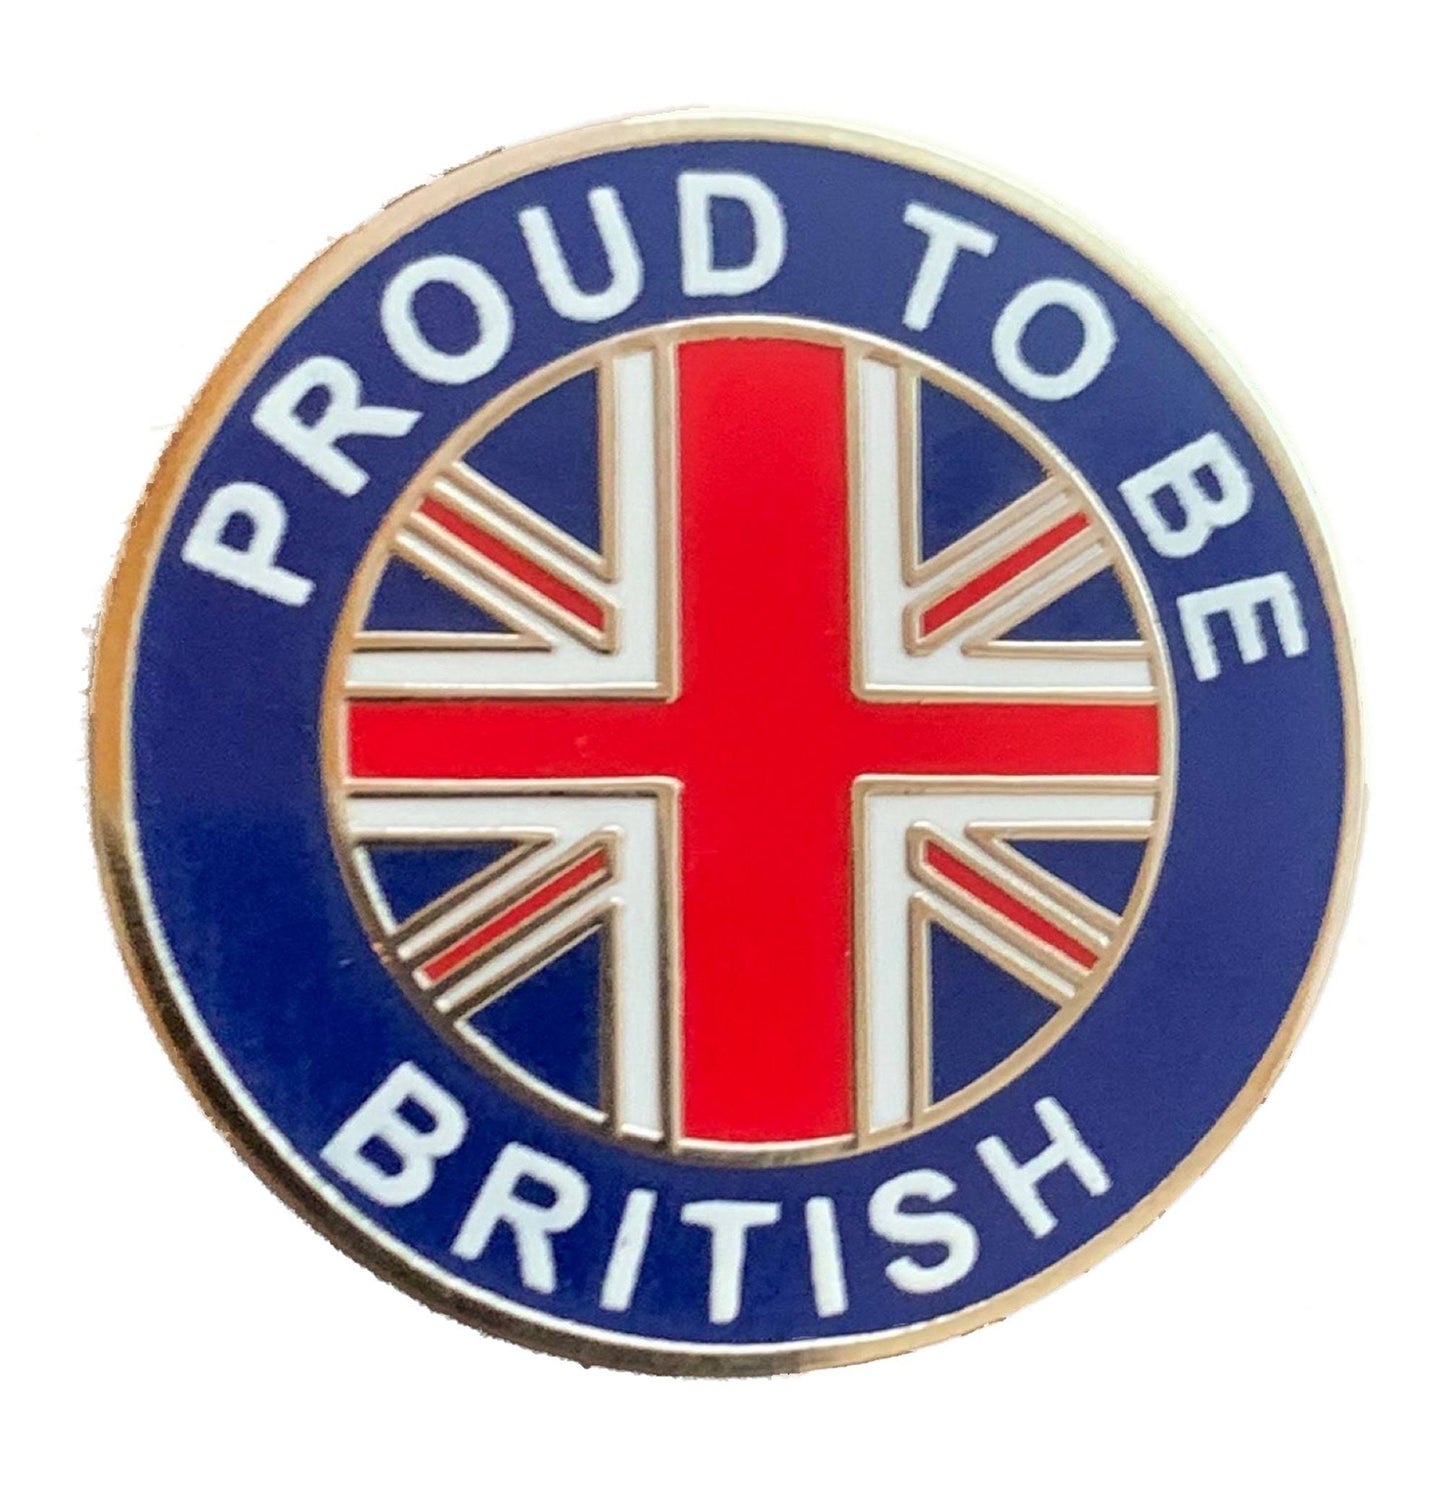 Proud To Be British Enamelled Pin Badge